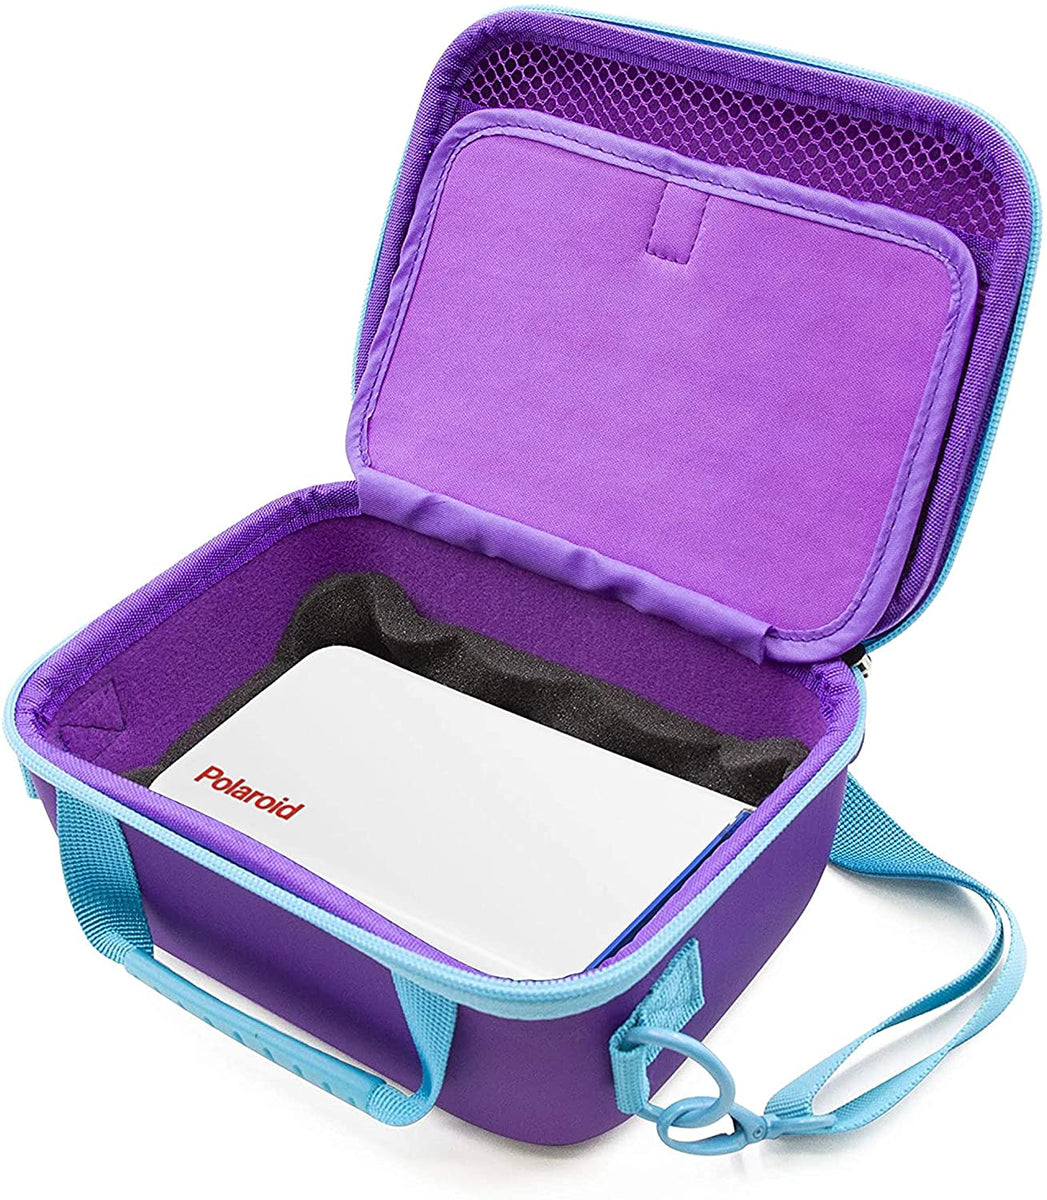  Silicone Protective Case for Lunii Fabulous Storyteller Version  1, Portable Transport Bag for Lunii 1, Purple : CDs & Vinyl